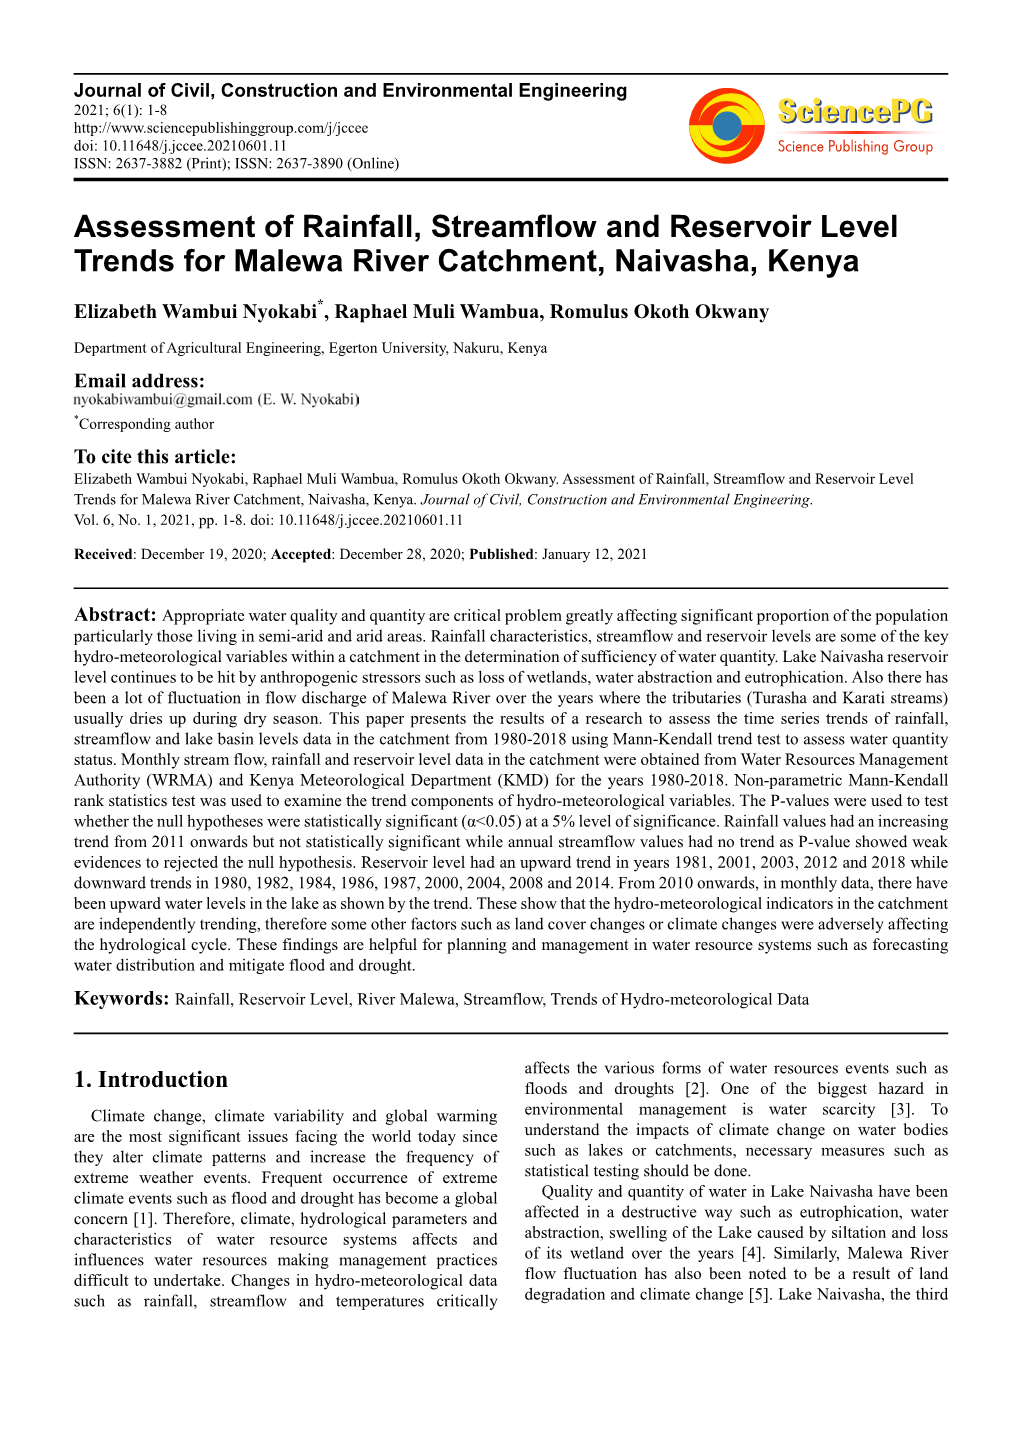 Assessment of Rainfall, Streamflow and Reservoir Level Trends for Malewa River Catchment, Naivasha, Kenya